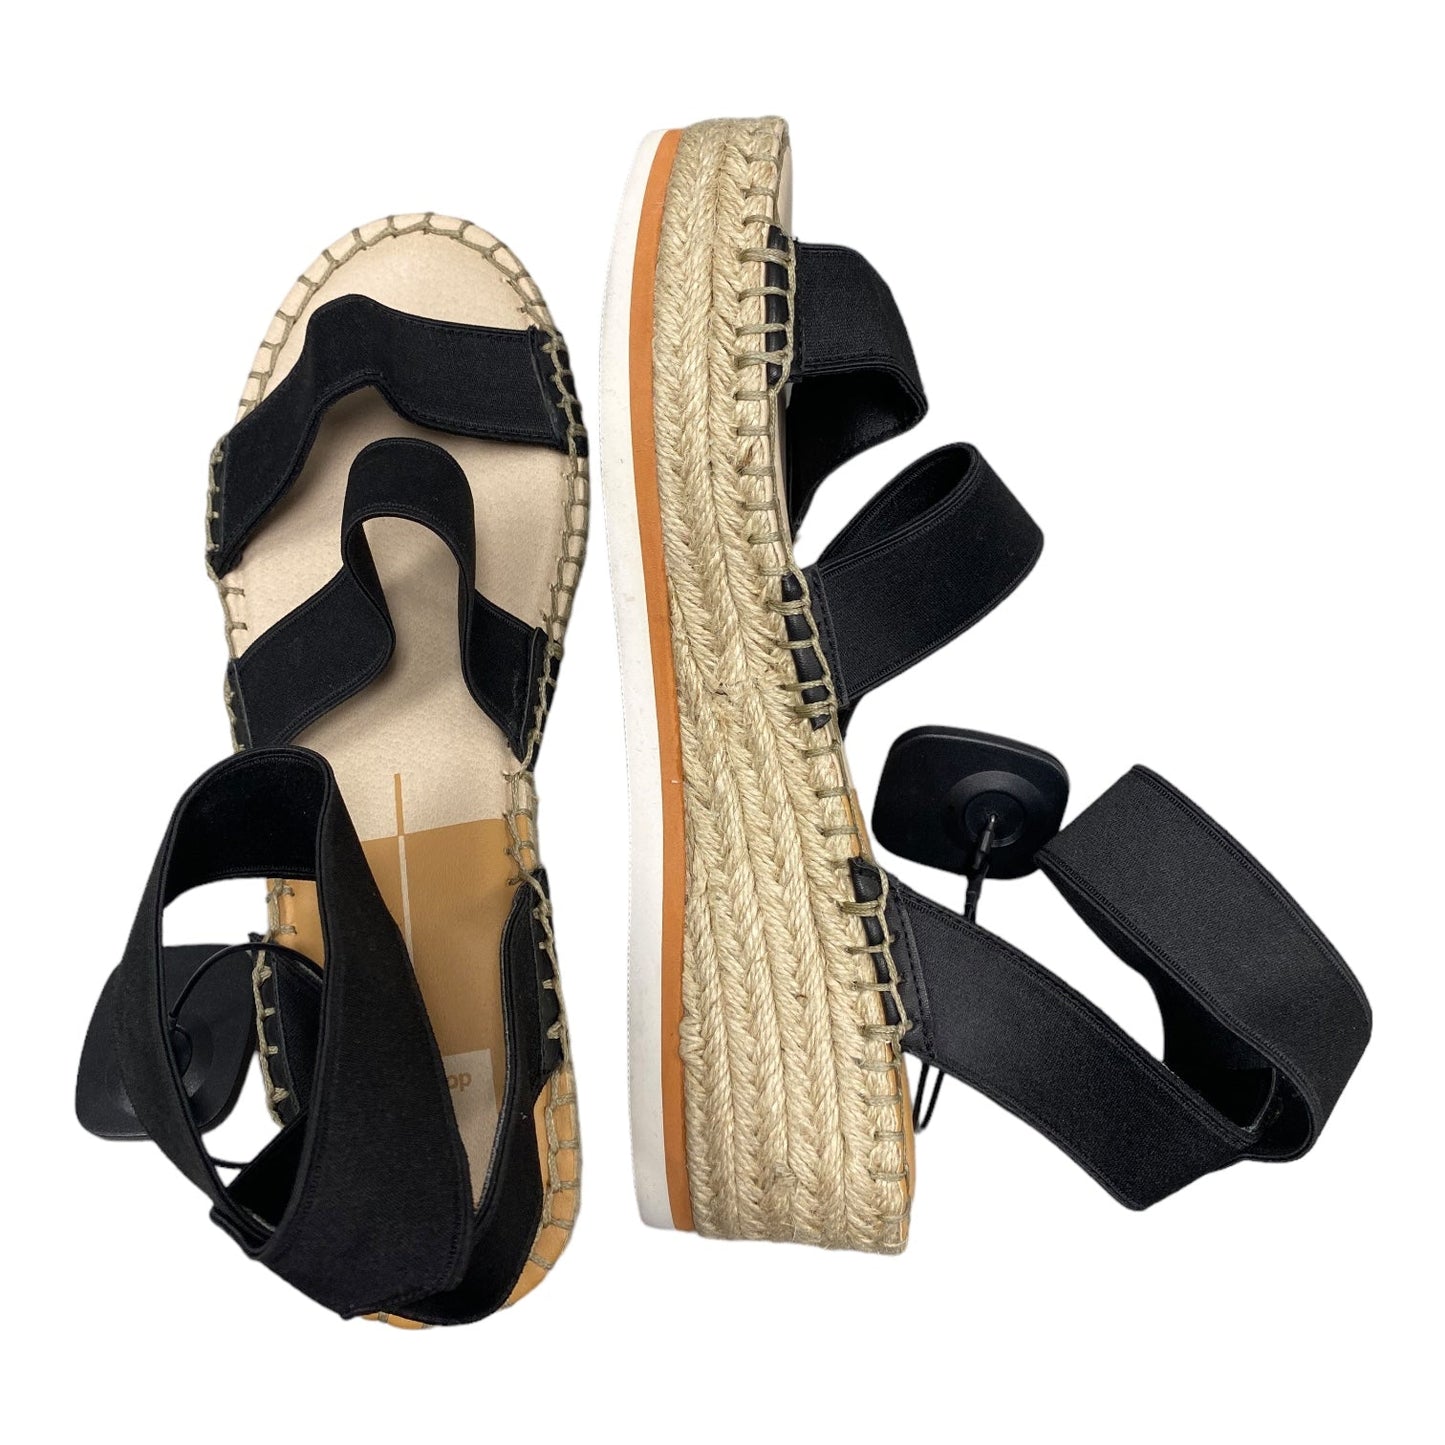 Black & Tan Sandals Heels Platform Dolce Vita, Size 10